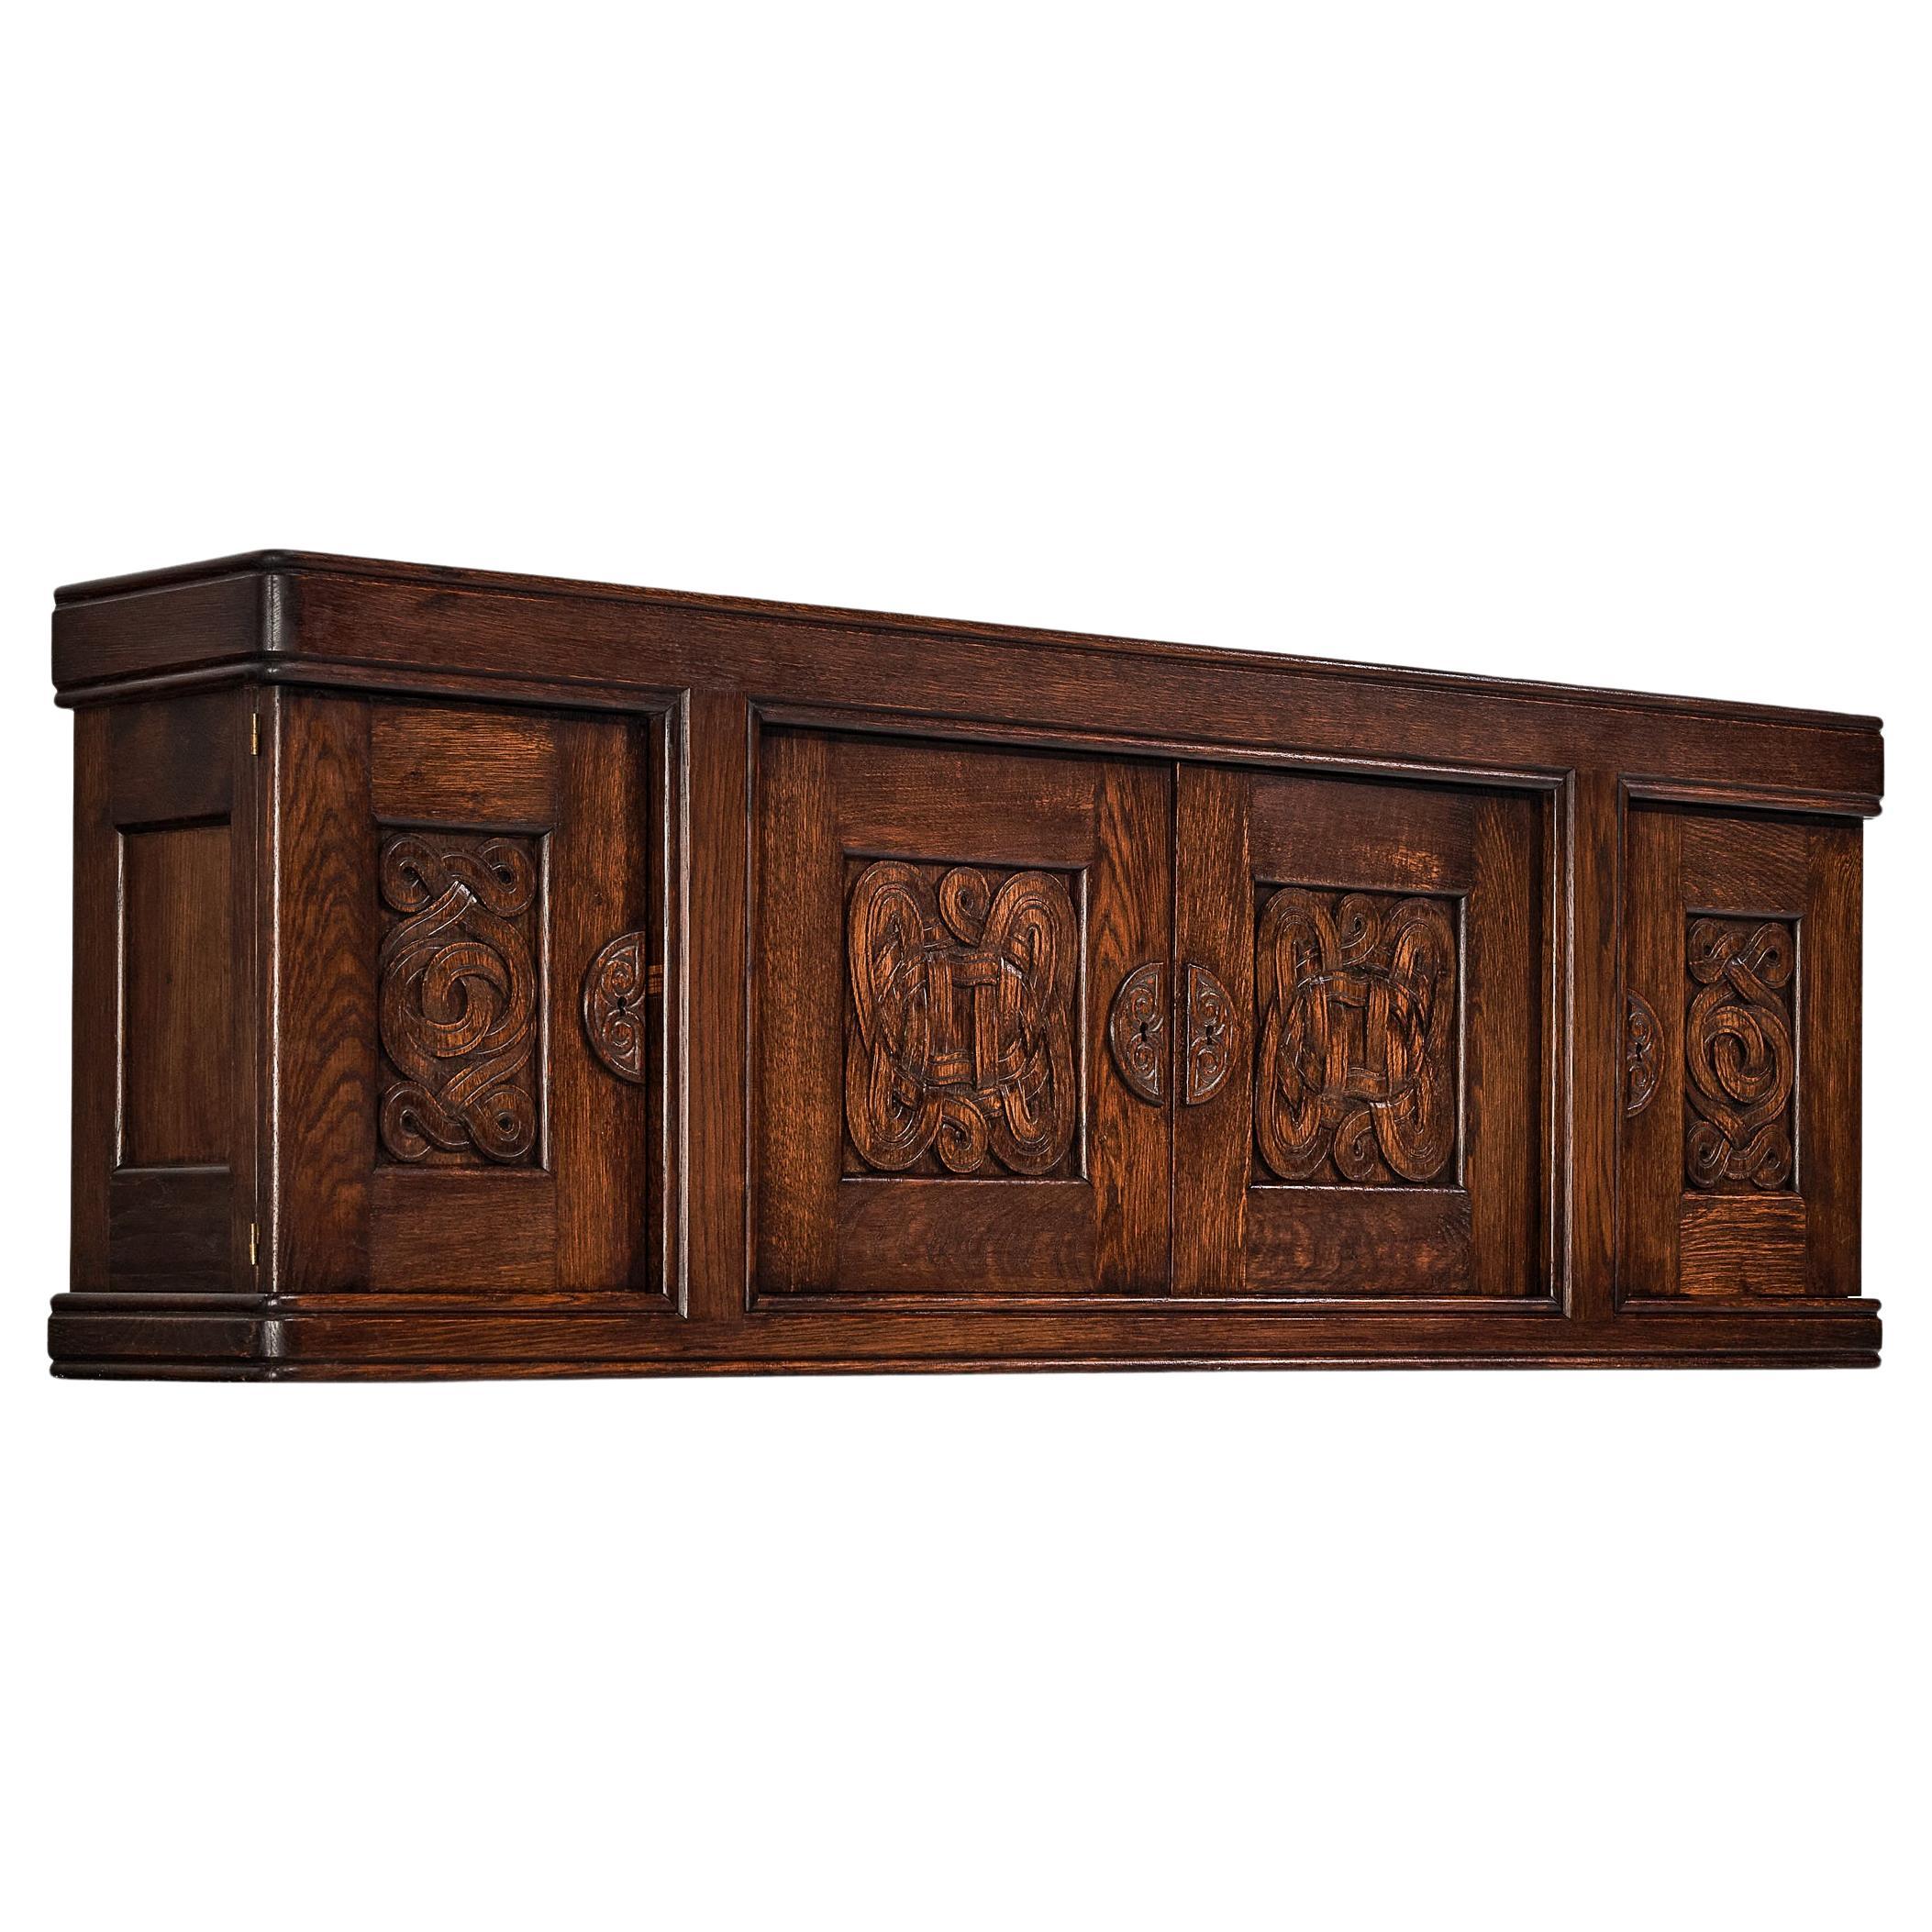 Joseph Savina Cabinet with Intricate Carvings in Oak 